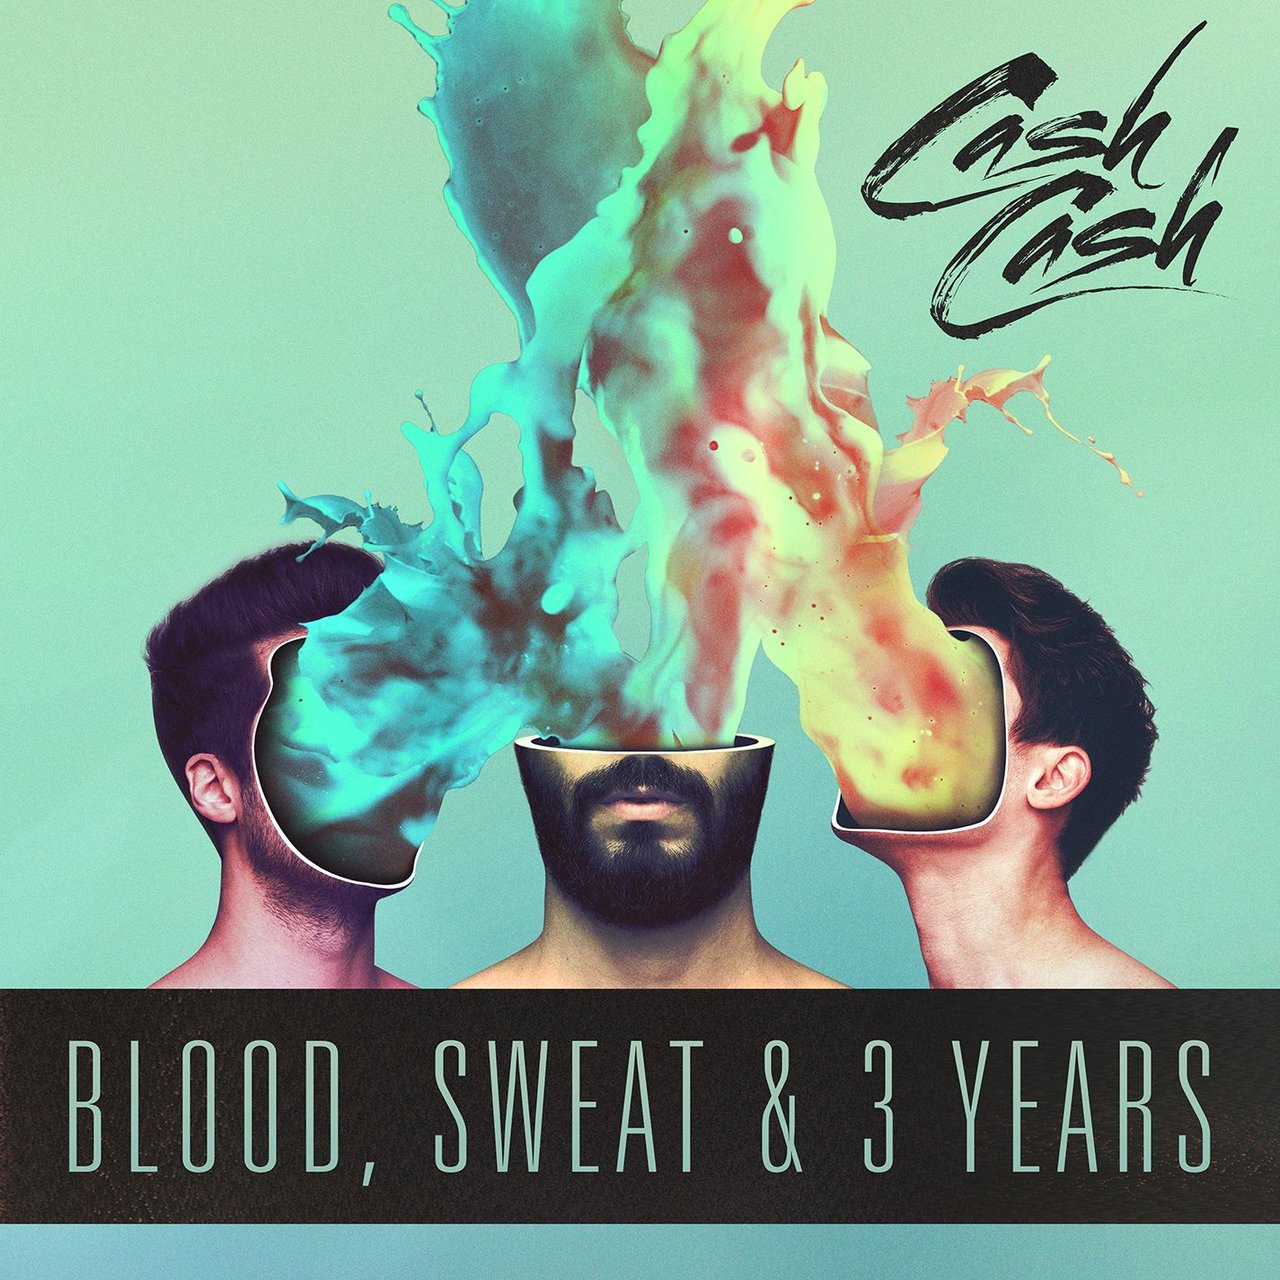 Cash Cash featuring Trinidad James, Dev, & Chrish — The Gun cover artwork